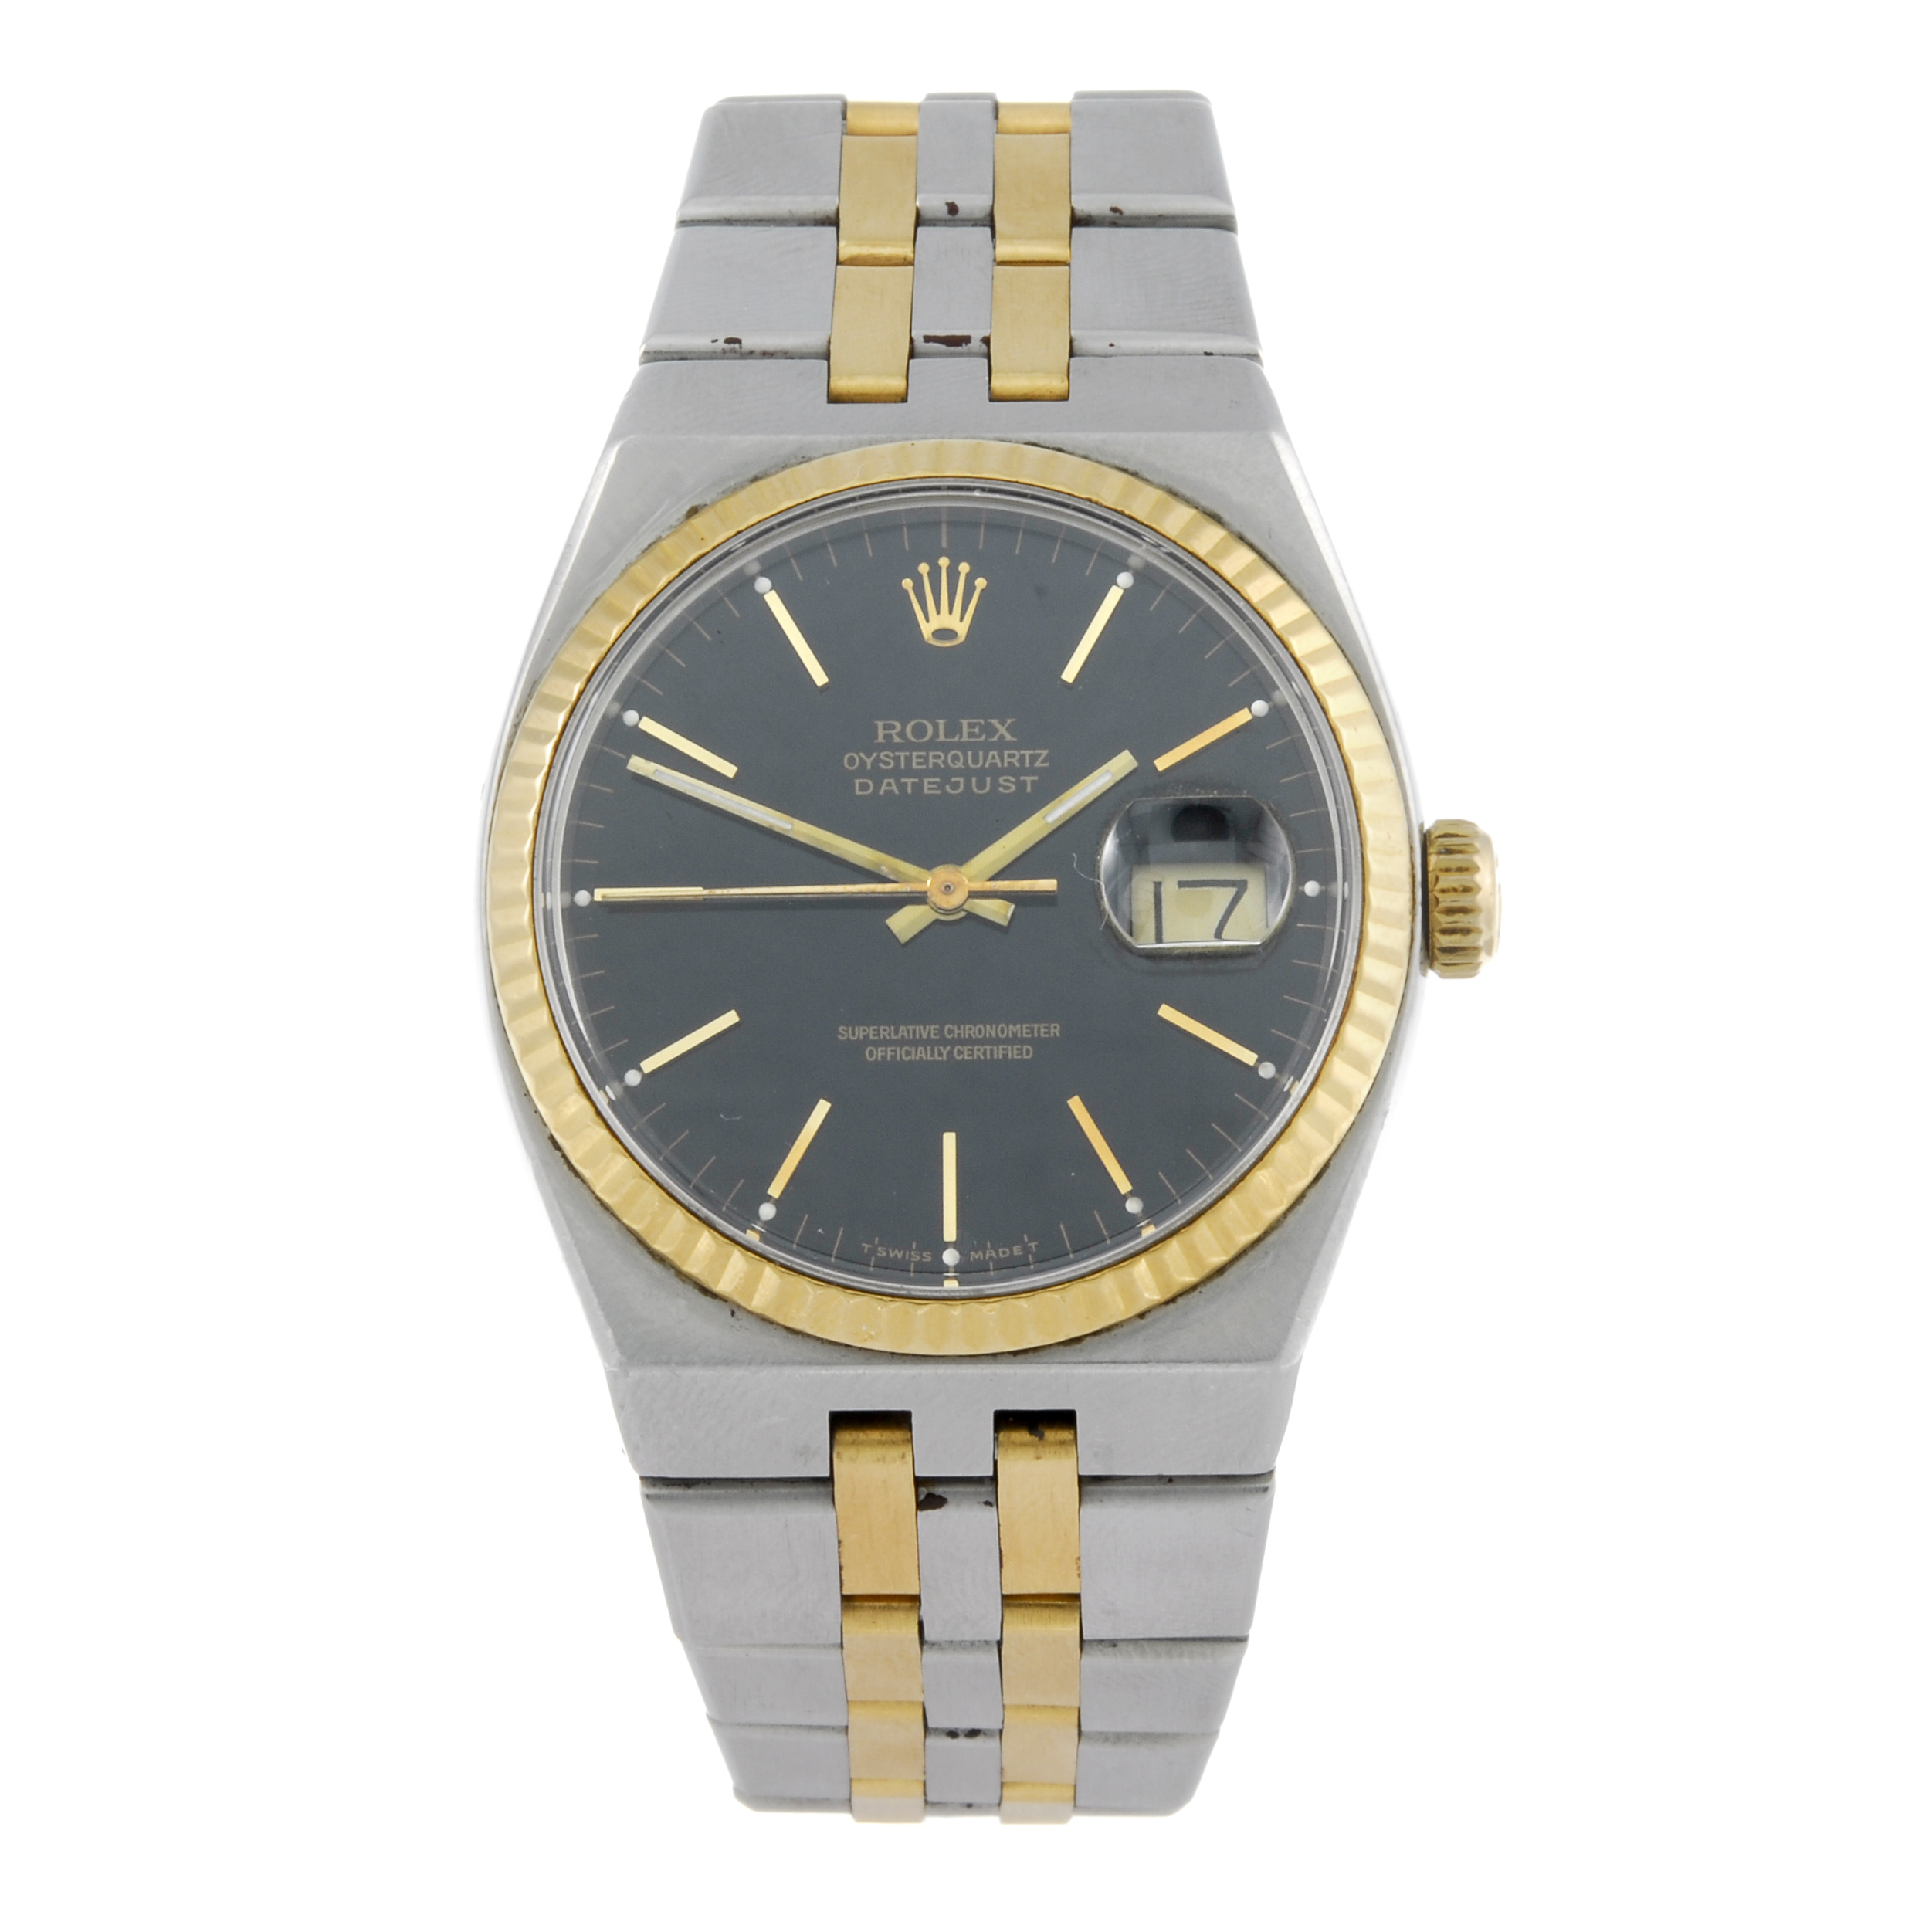 ROLEX - a gentleman's Oysterquartz Datejust bracelet watch. Circa 1987. Stainless steel case with